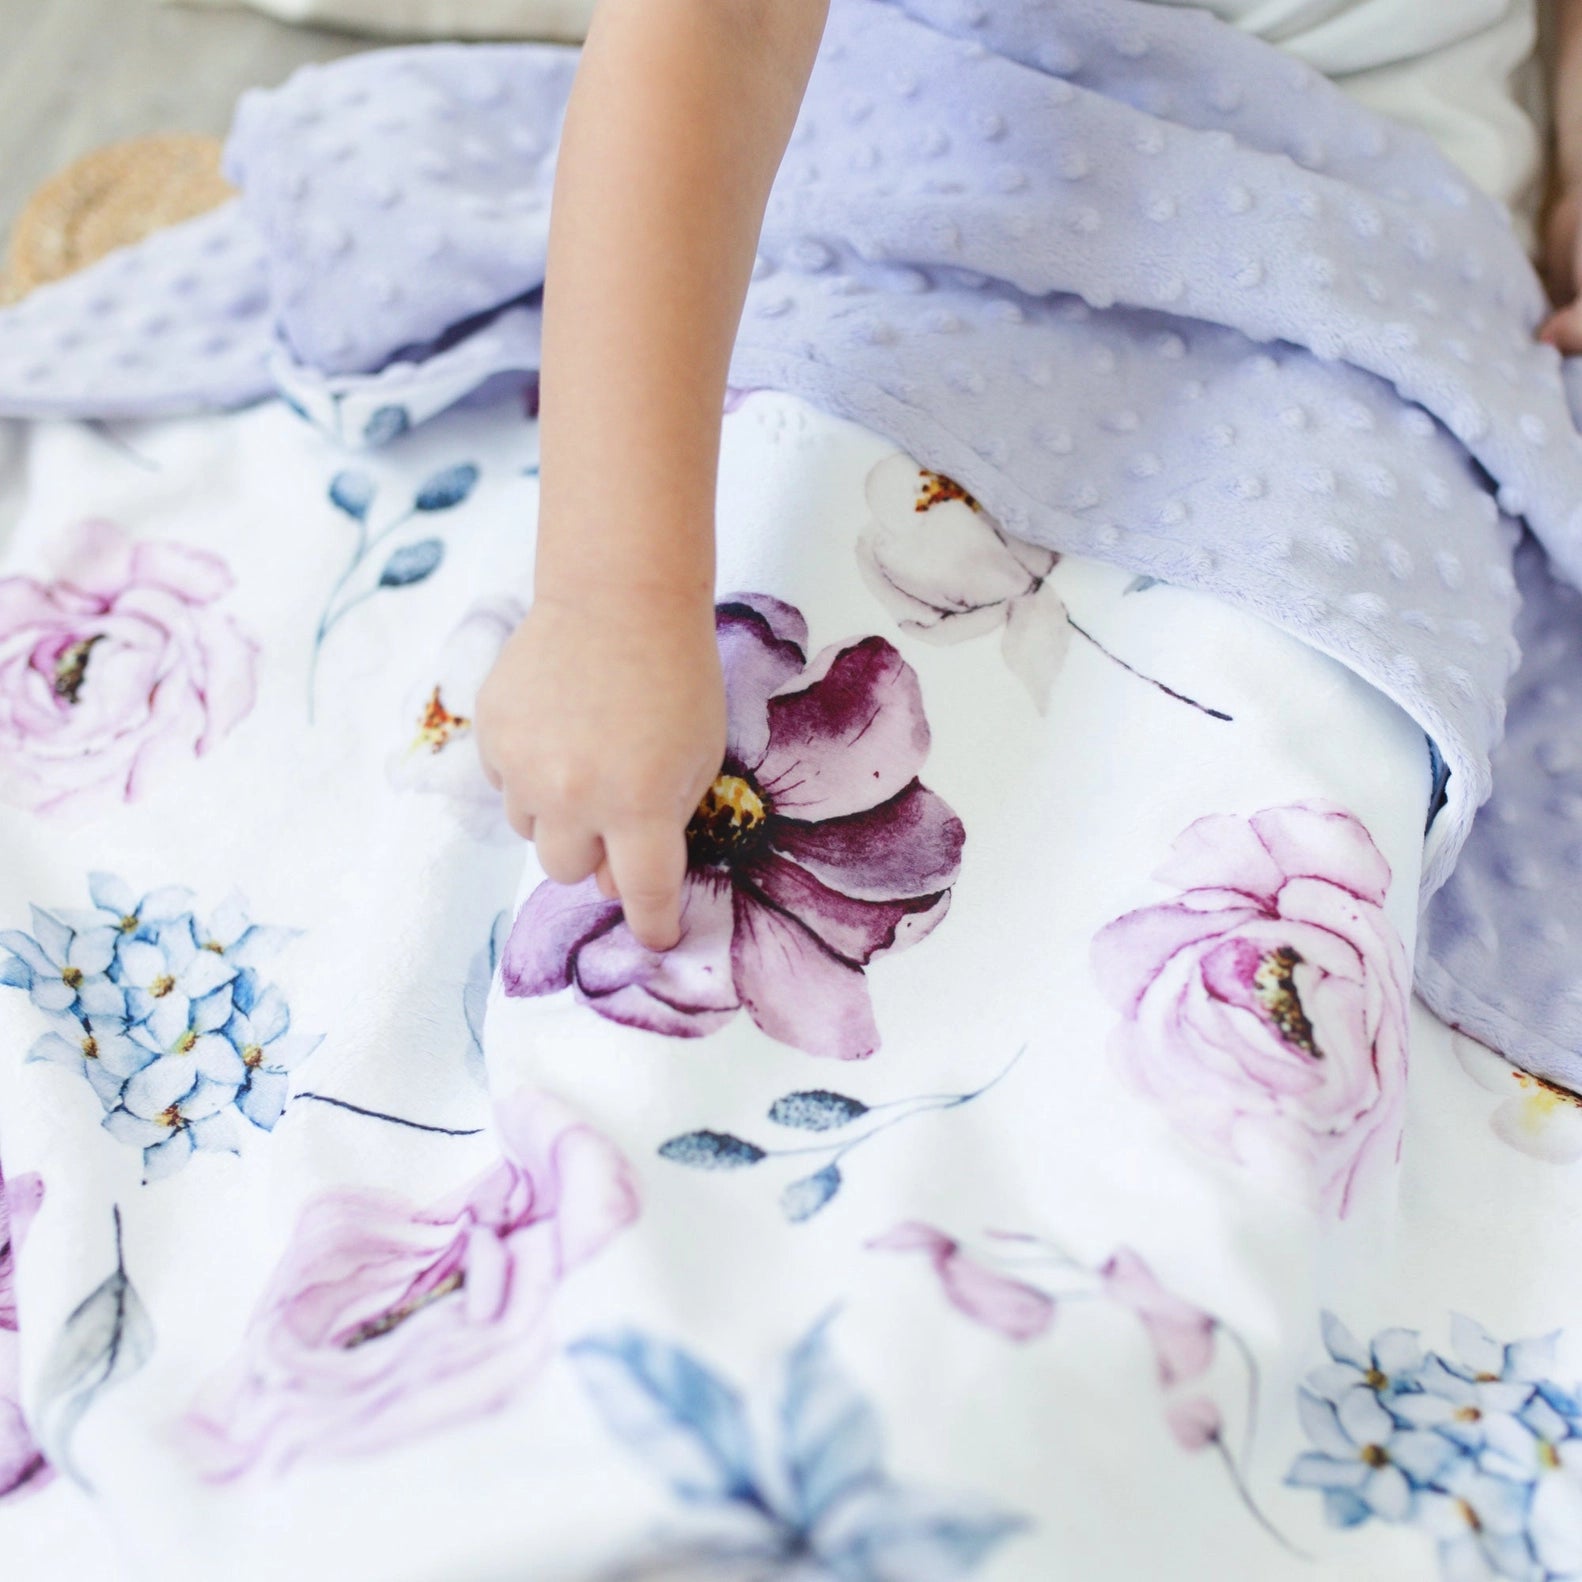 Honey Lemonade - Baby & Toddler Minky Blanket - Vintage Floral